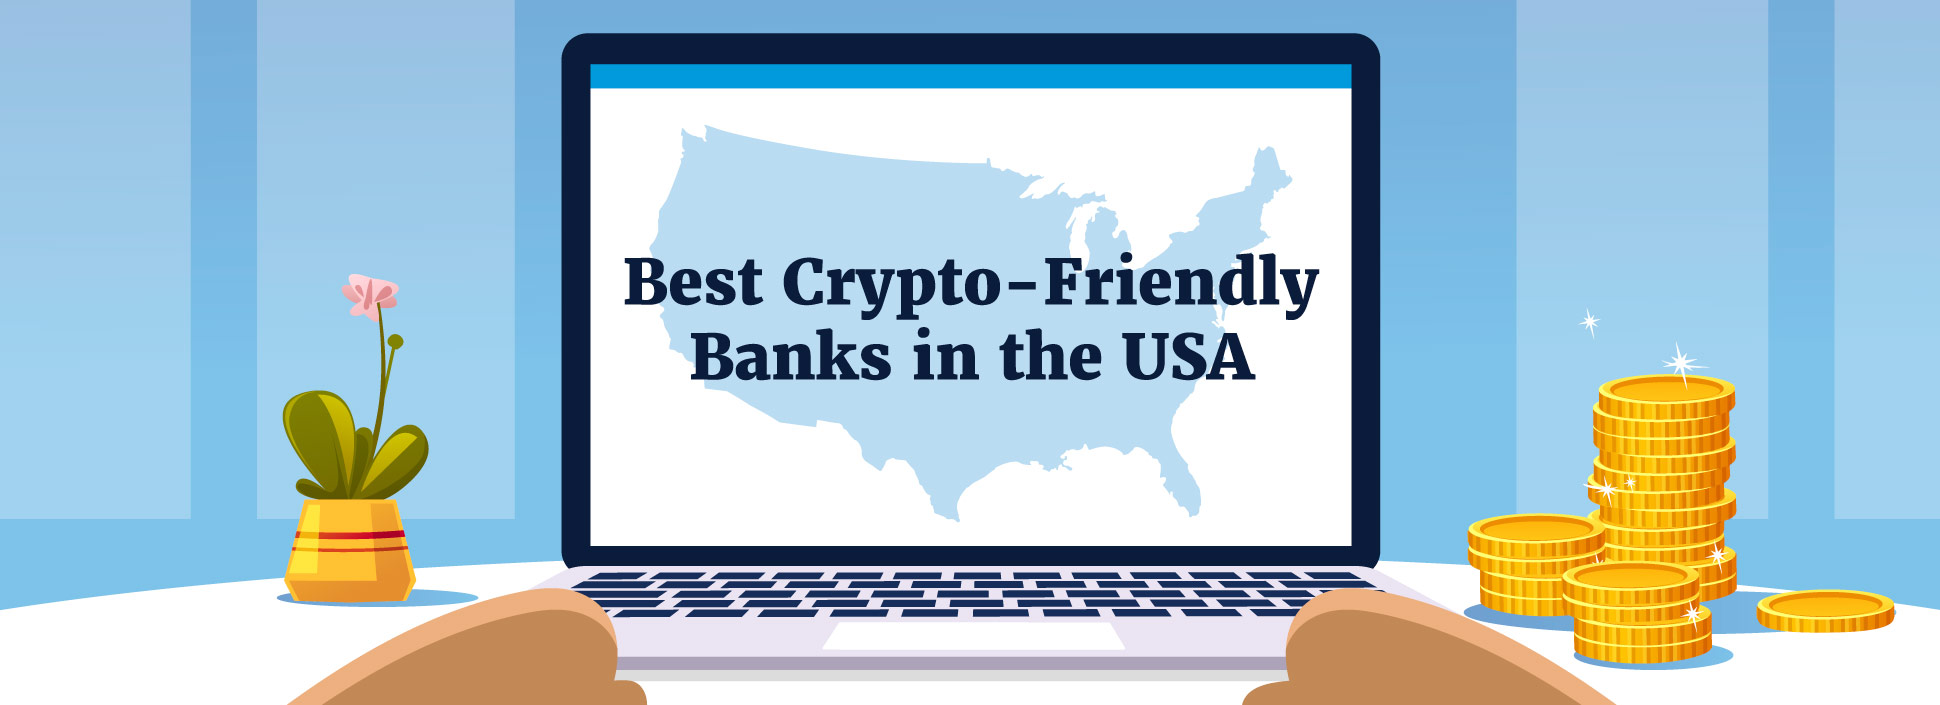 Best crypto friendly banks usa cadastre blockchain